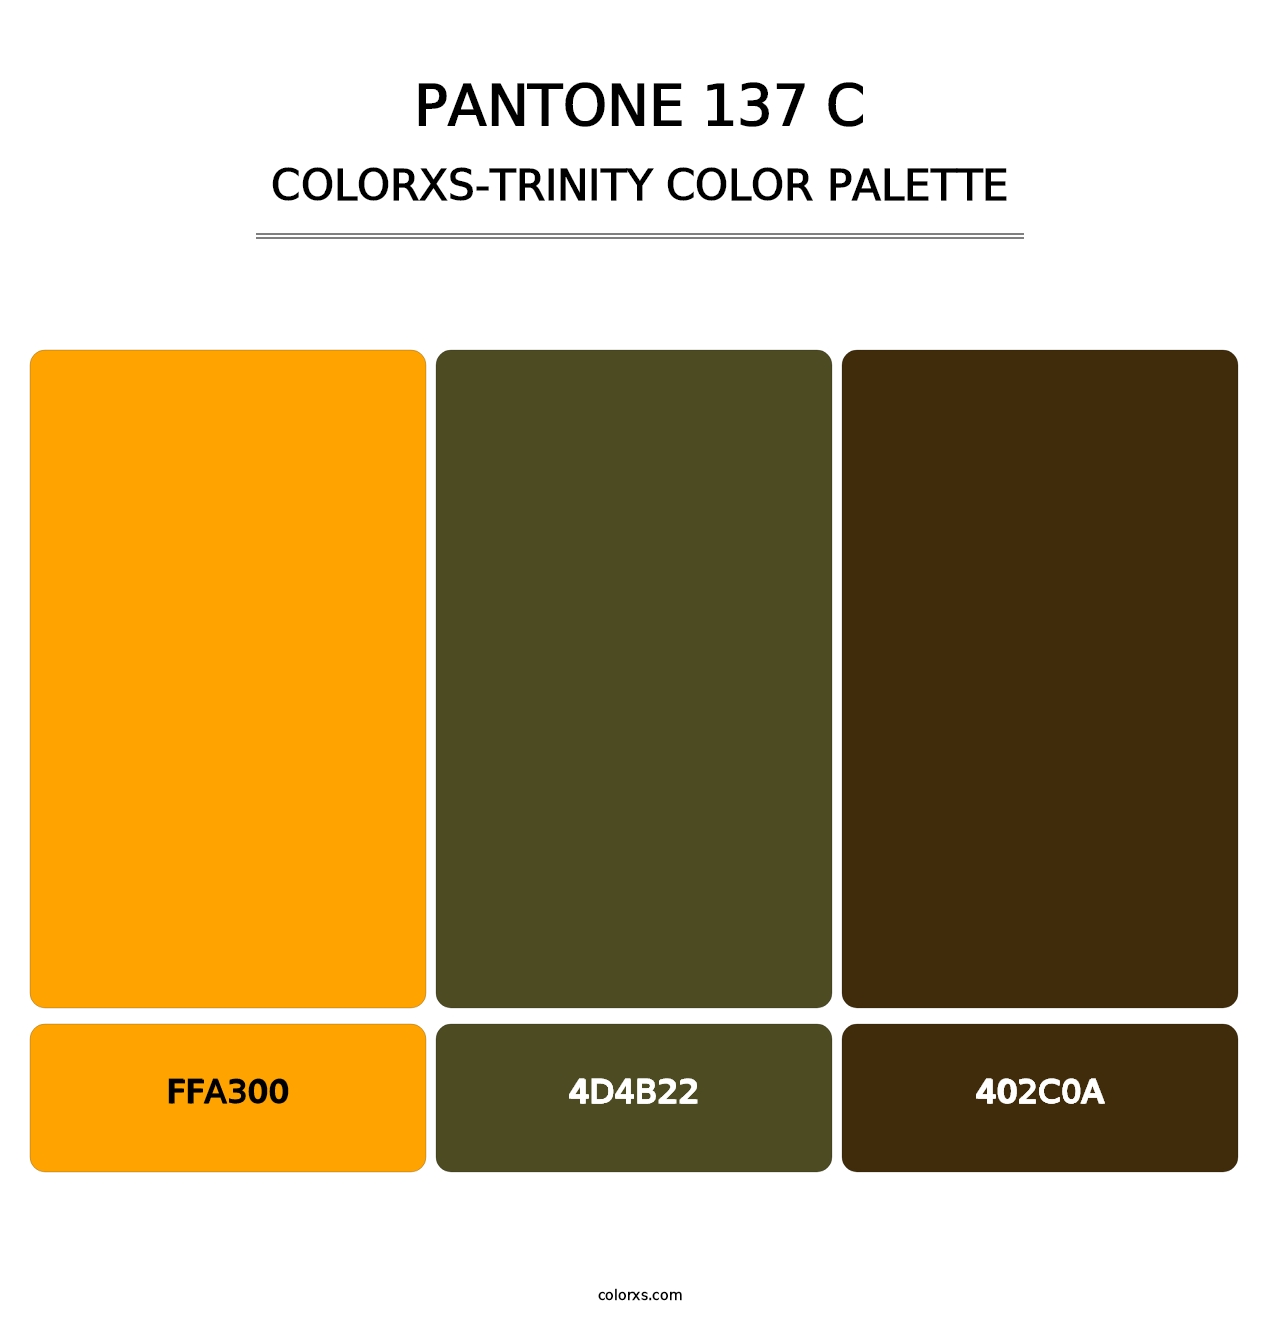 PANTONE 137 C - Colorxs Trinity Palette